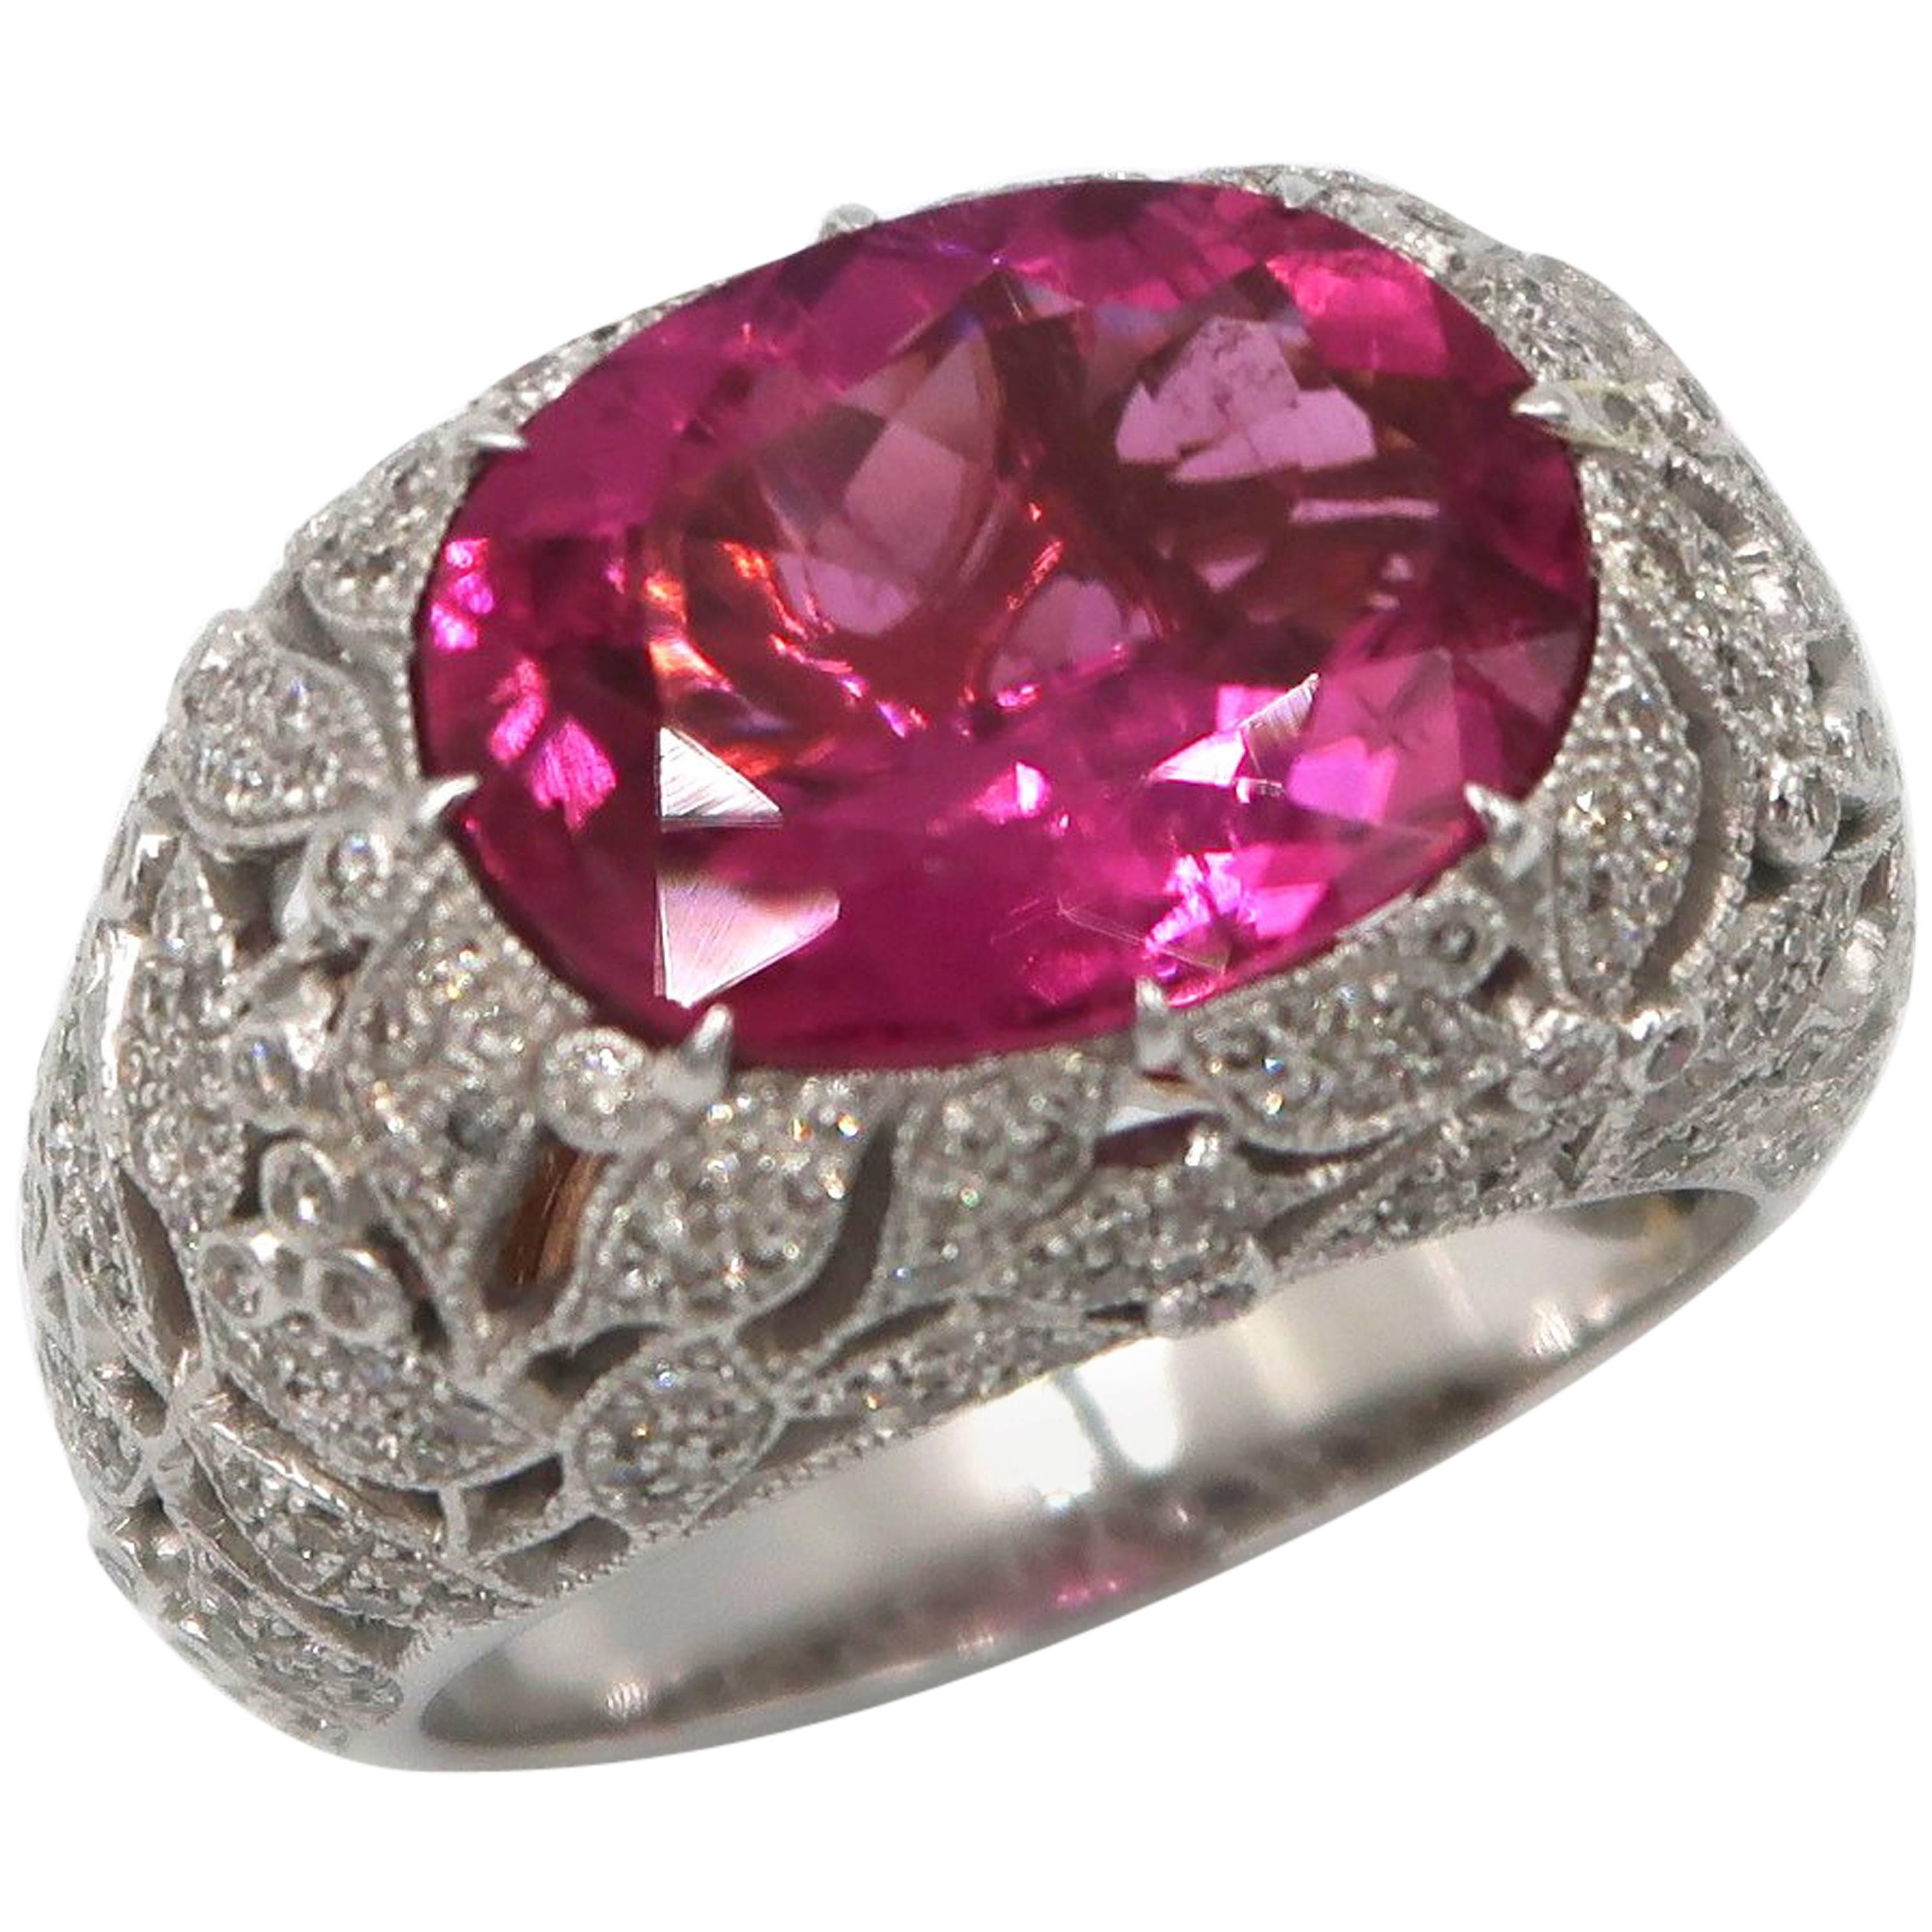 5.5 Carat Large Oval Pink Tourmaline Diamond White Gold Lace Work Ring